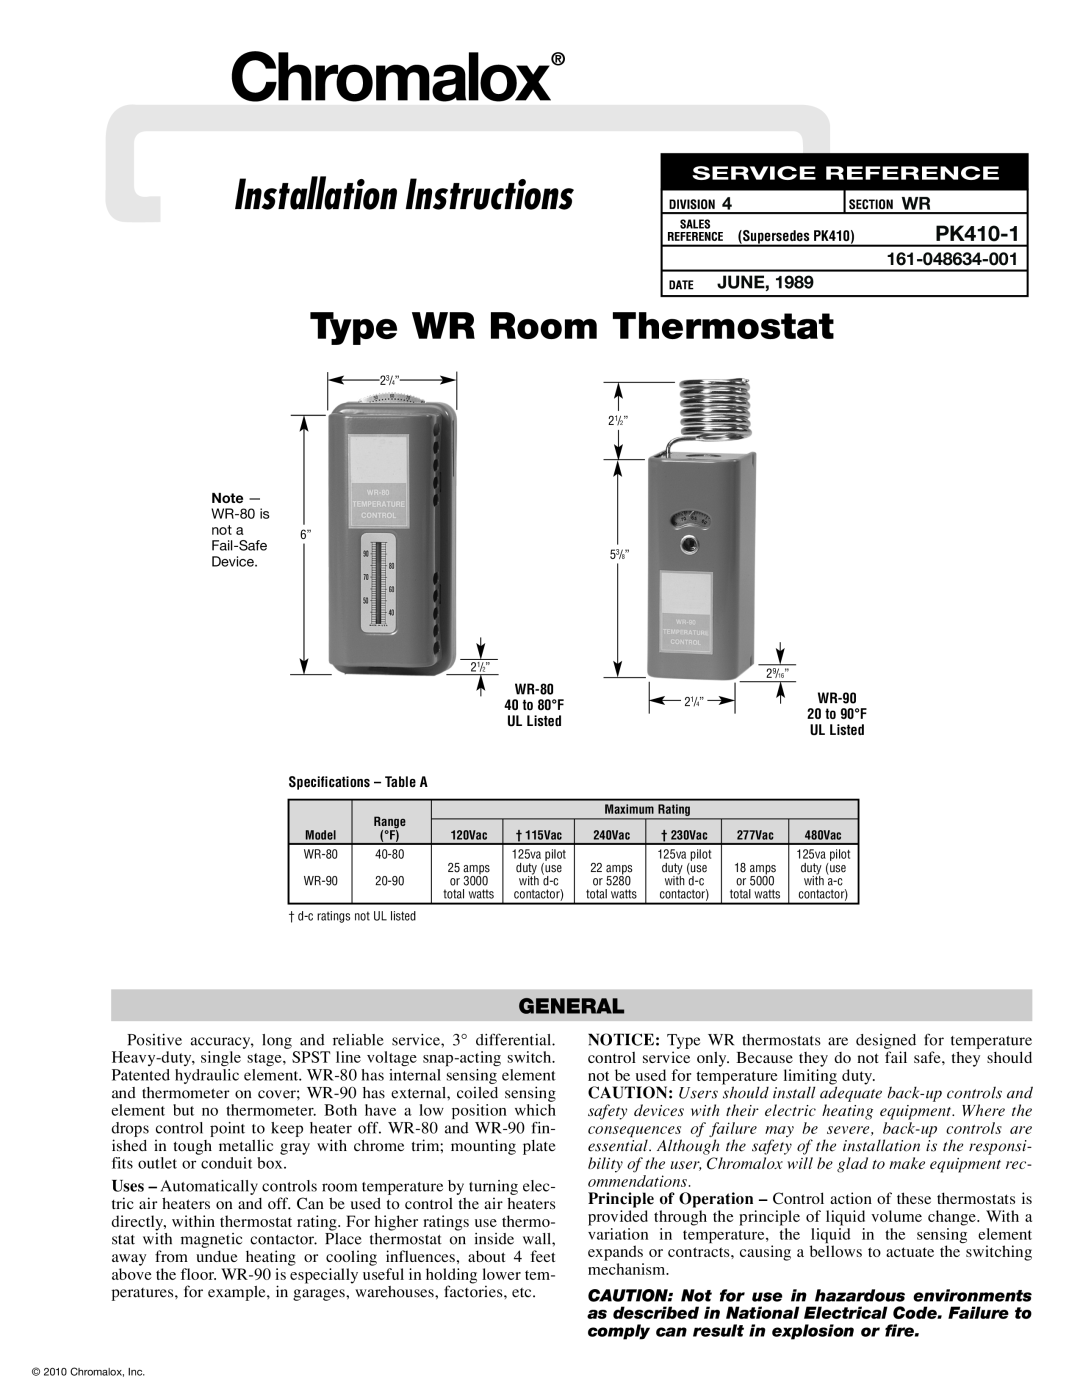 Chromalox PK410-1 installation instructions General, Installation Instructions, Type WR Room Thermostat, June 